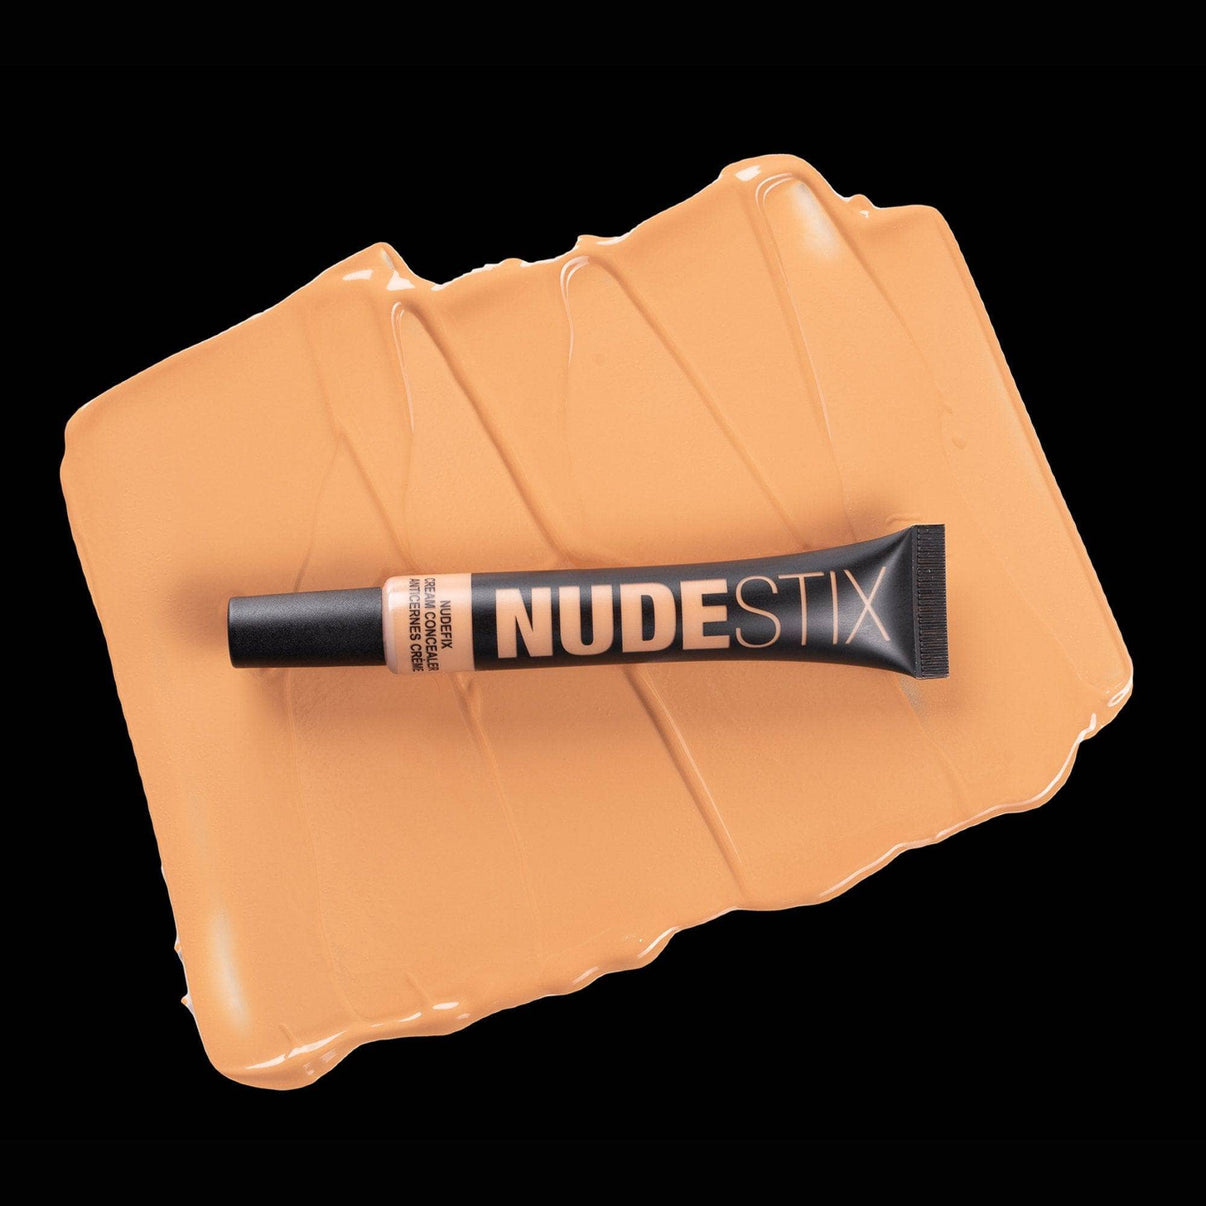 Nudefix cream concealer in shade nude 6 on top of texture swatch